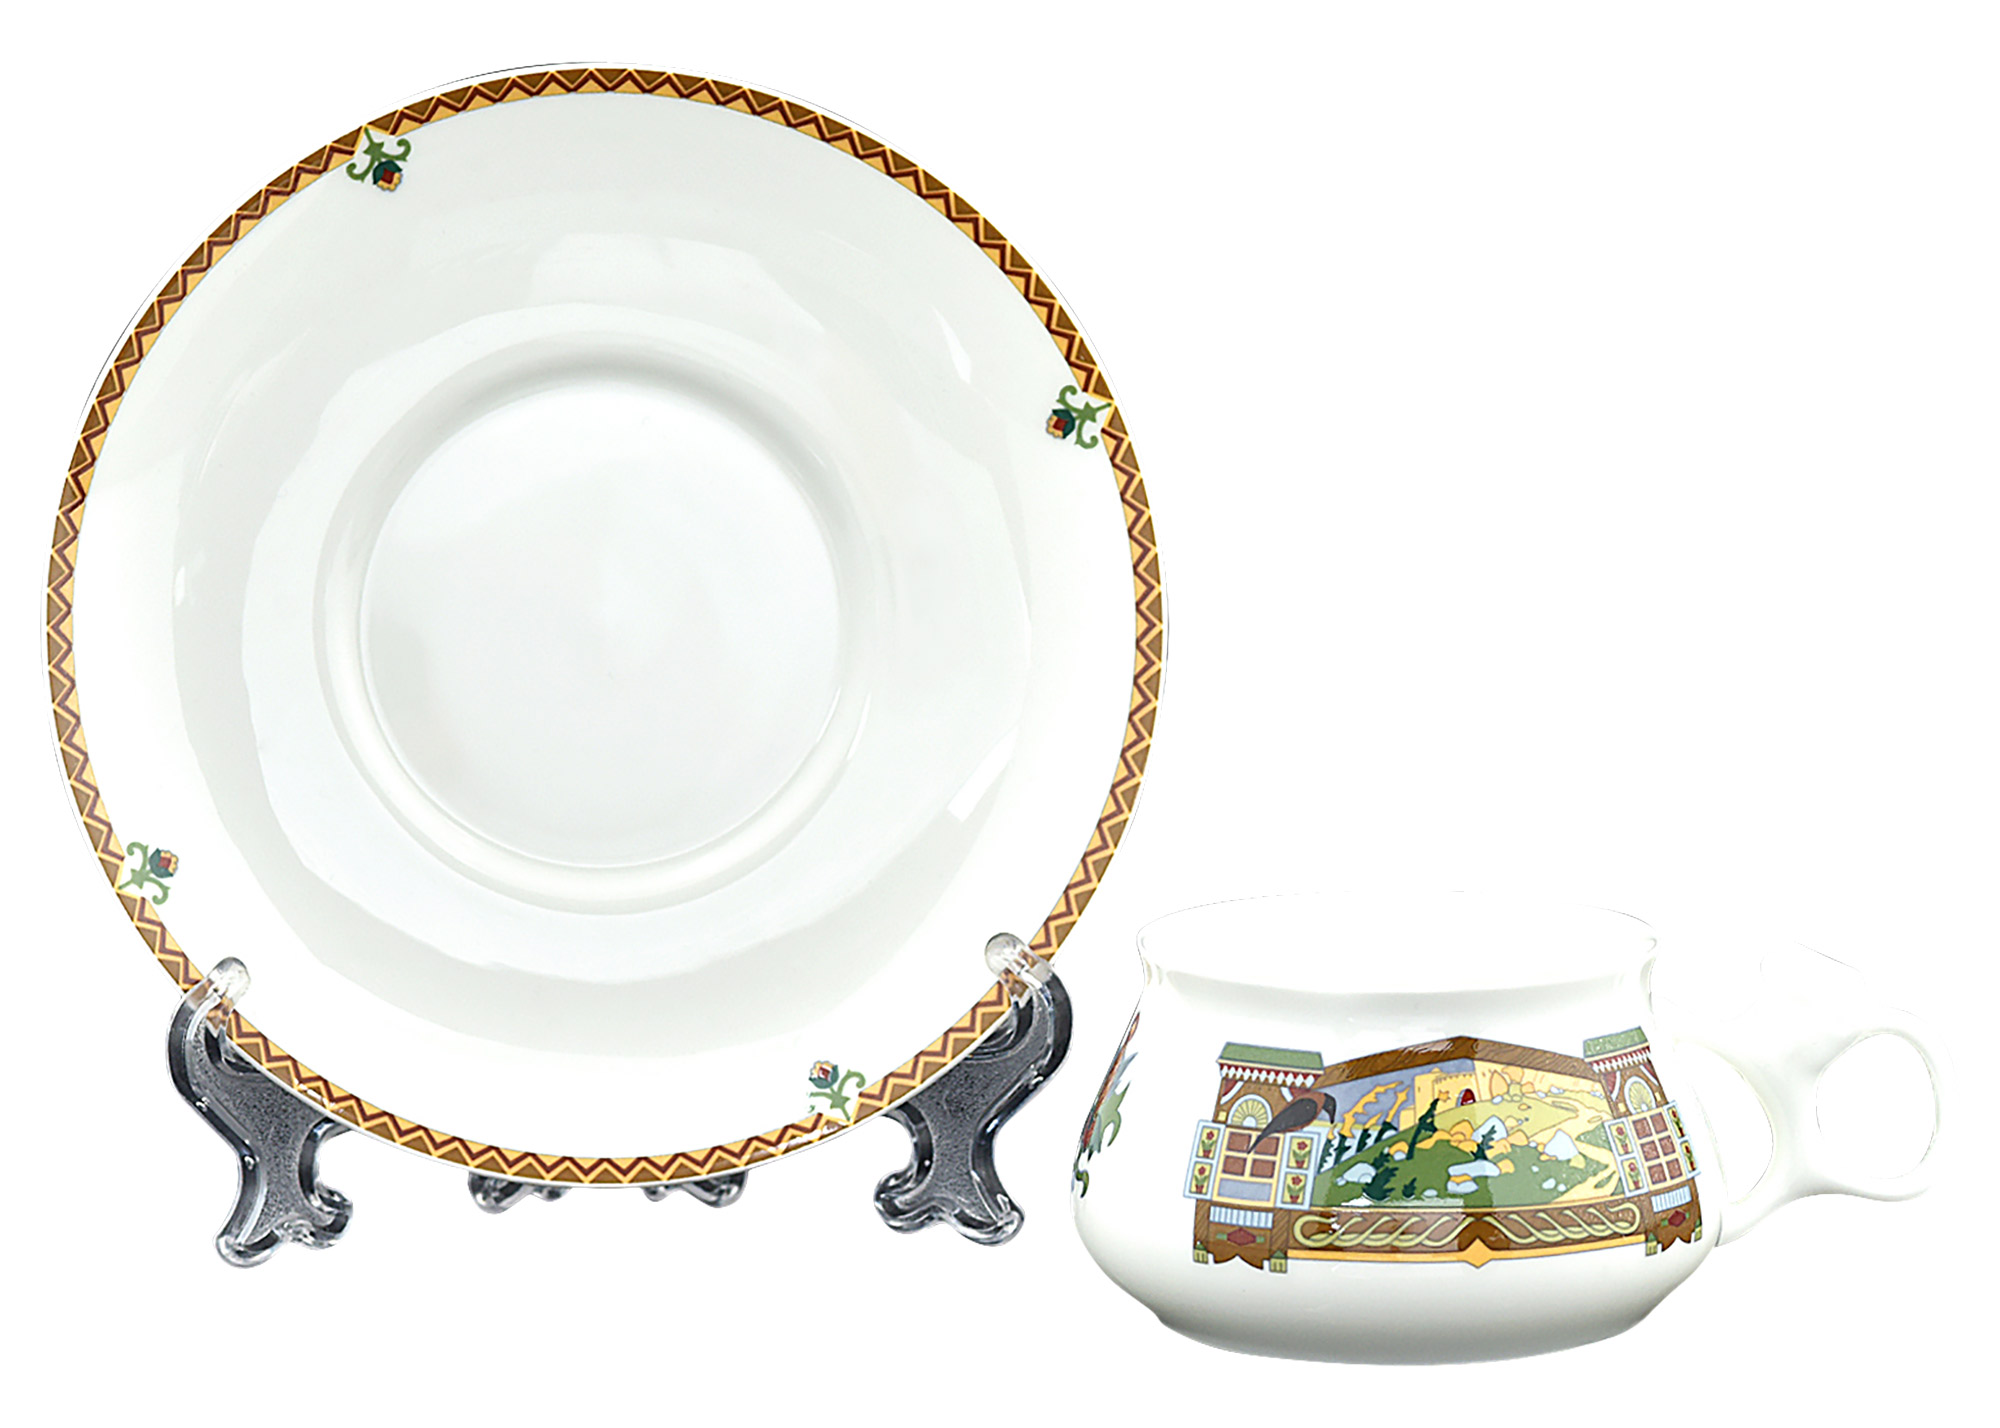 Buy Bilibin's Fairy Tale Landscape Bone China Tea Cup and Saucer at GoldenCockerel.com